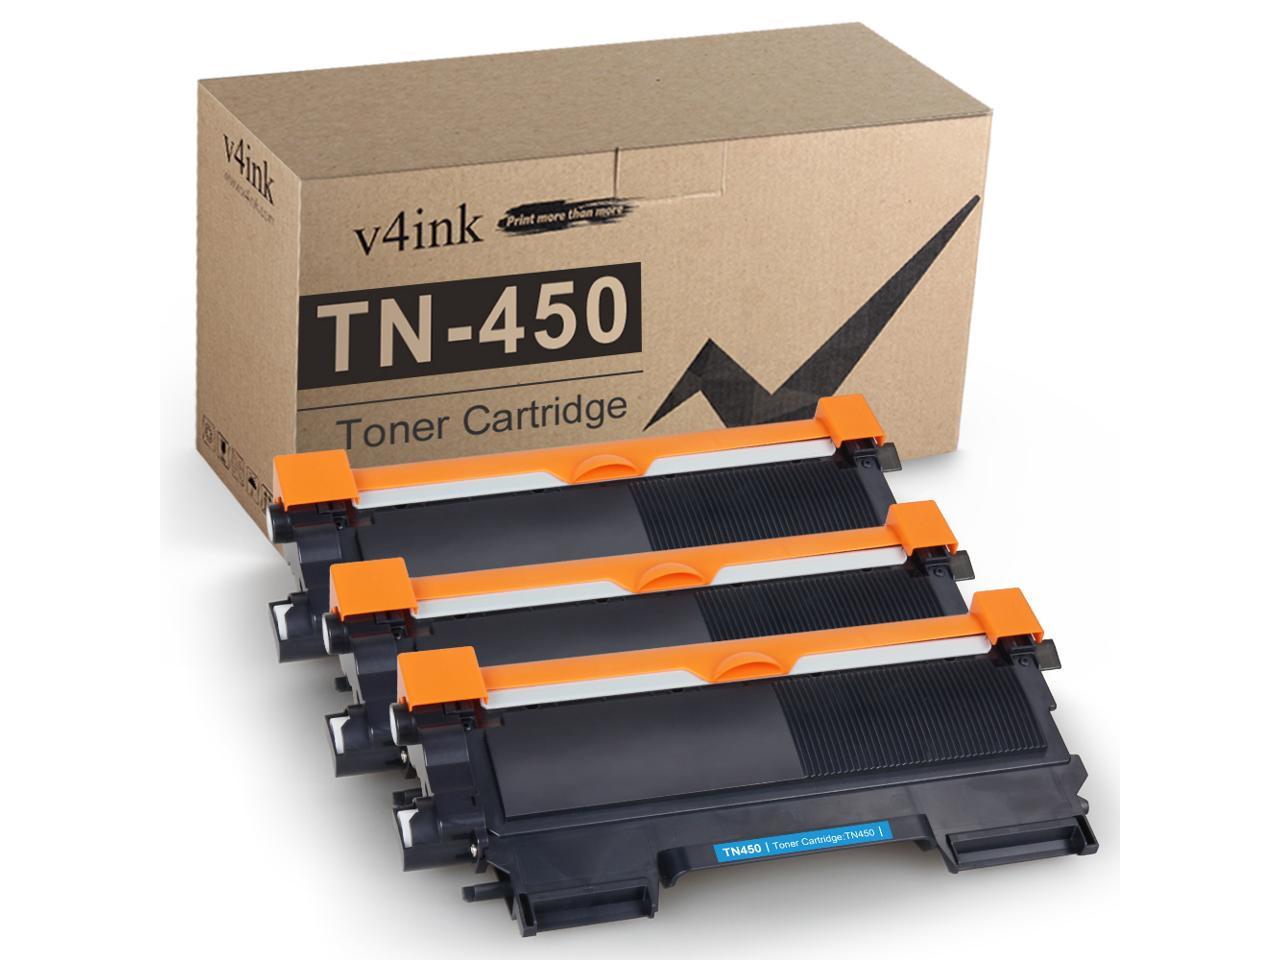 1 pack TN450 Toner Cartridge fits  HL-2240D HL-2270DW Printer USA SELLER! 